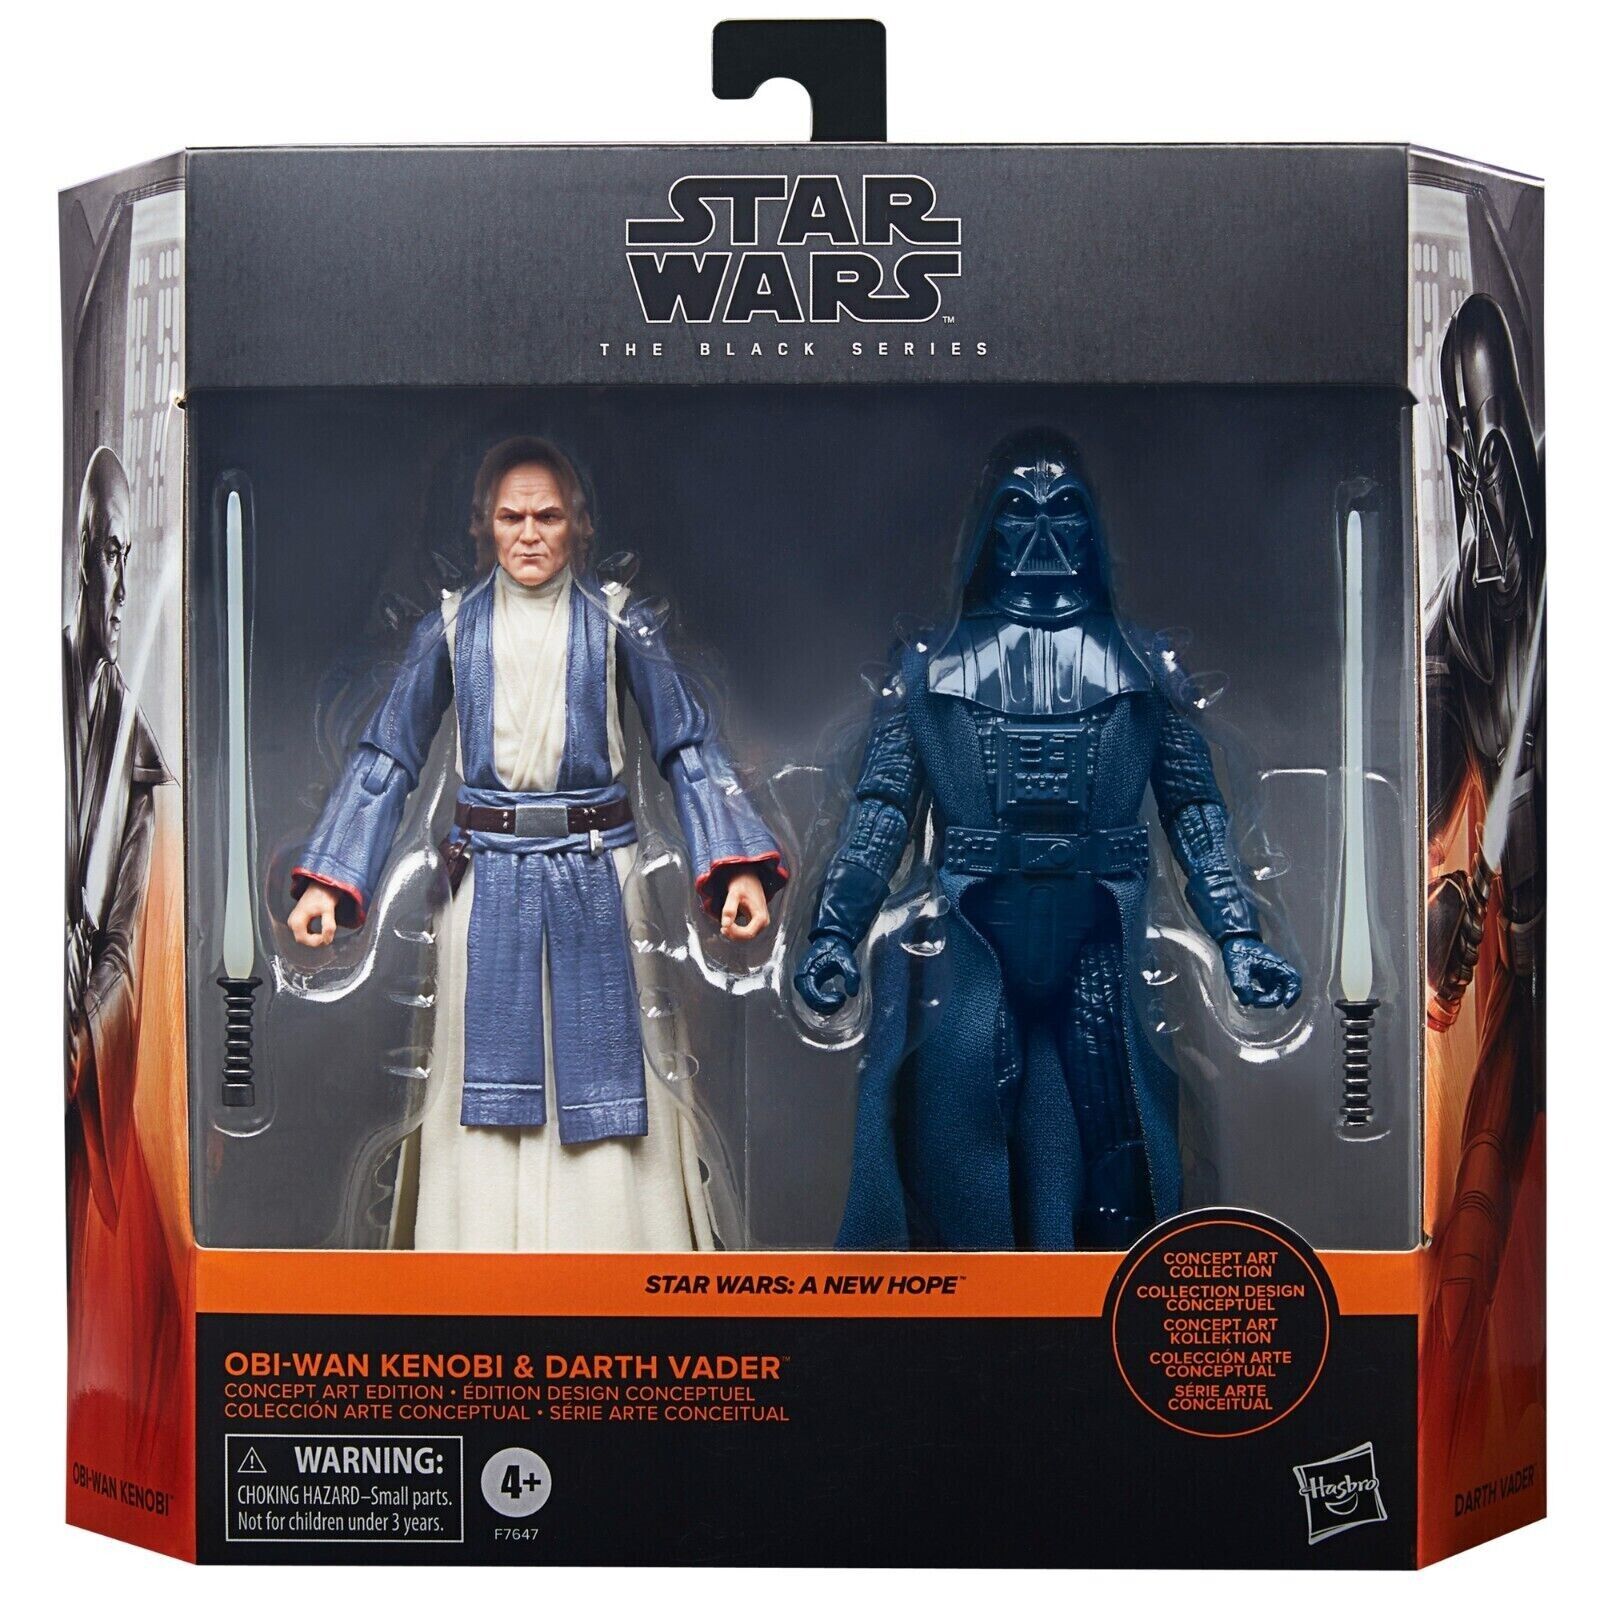 Star Wars Black Series 6 Inch Figures: Obi-Wan Kenobi & Darth Vader Concept